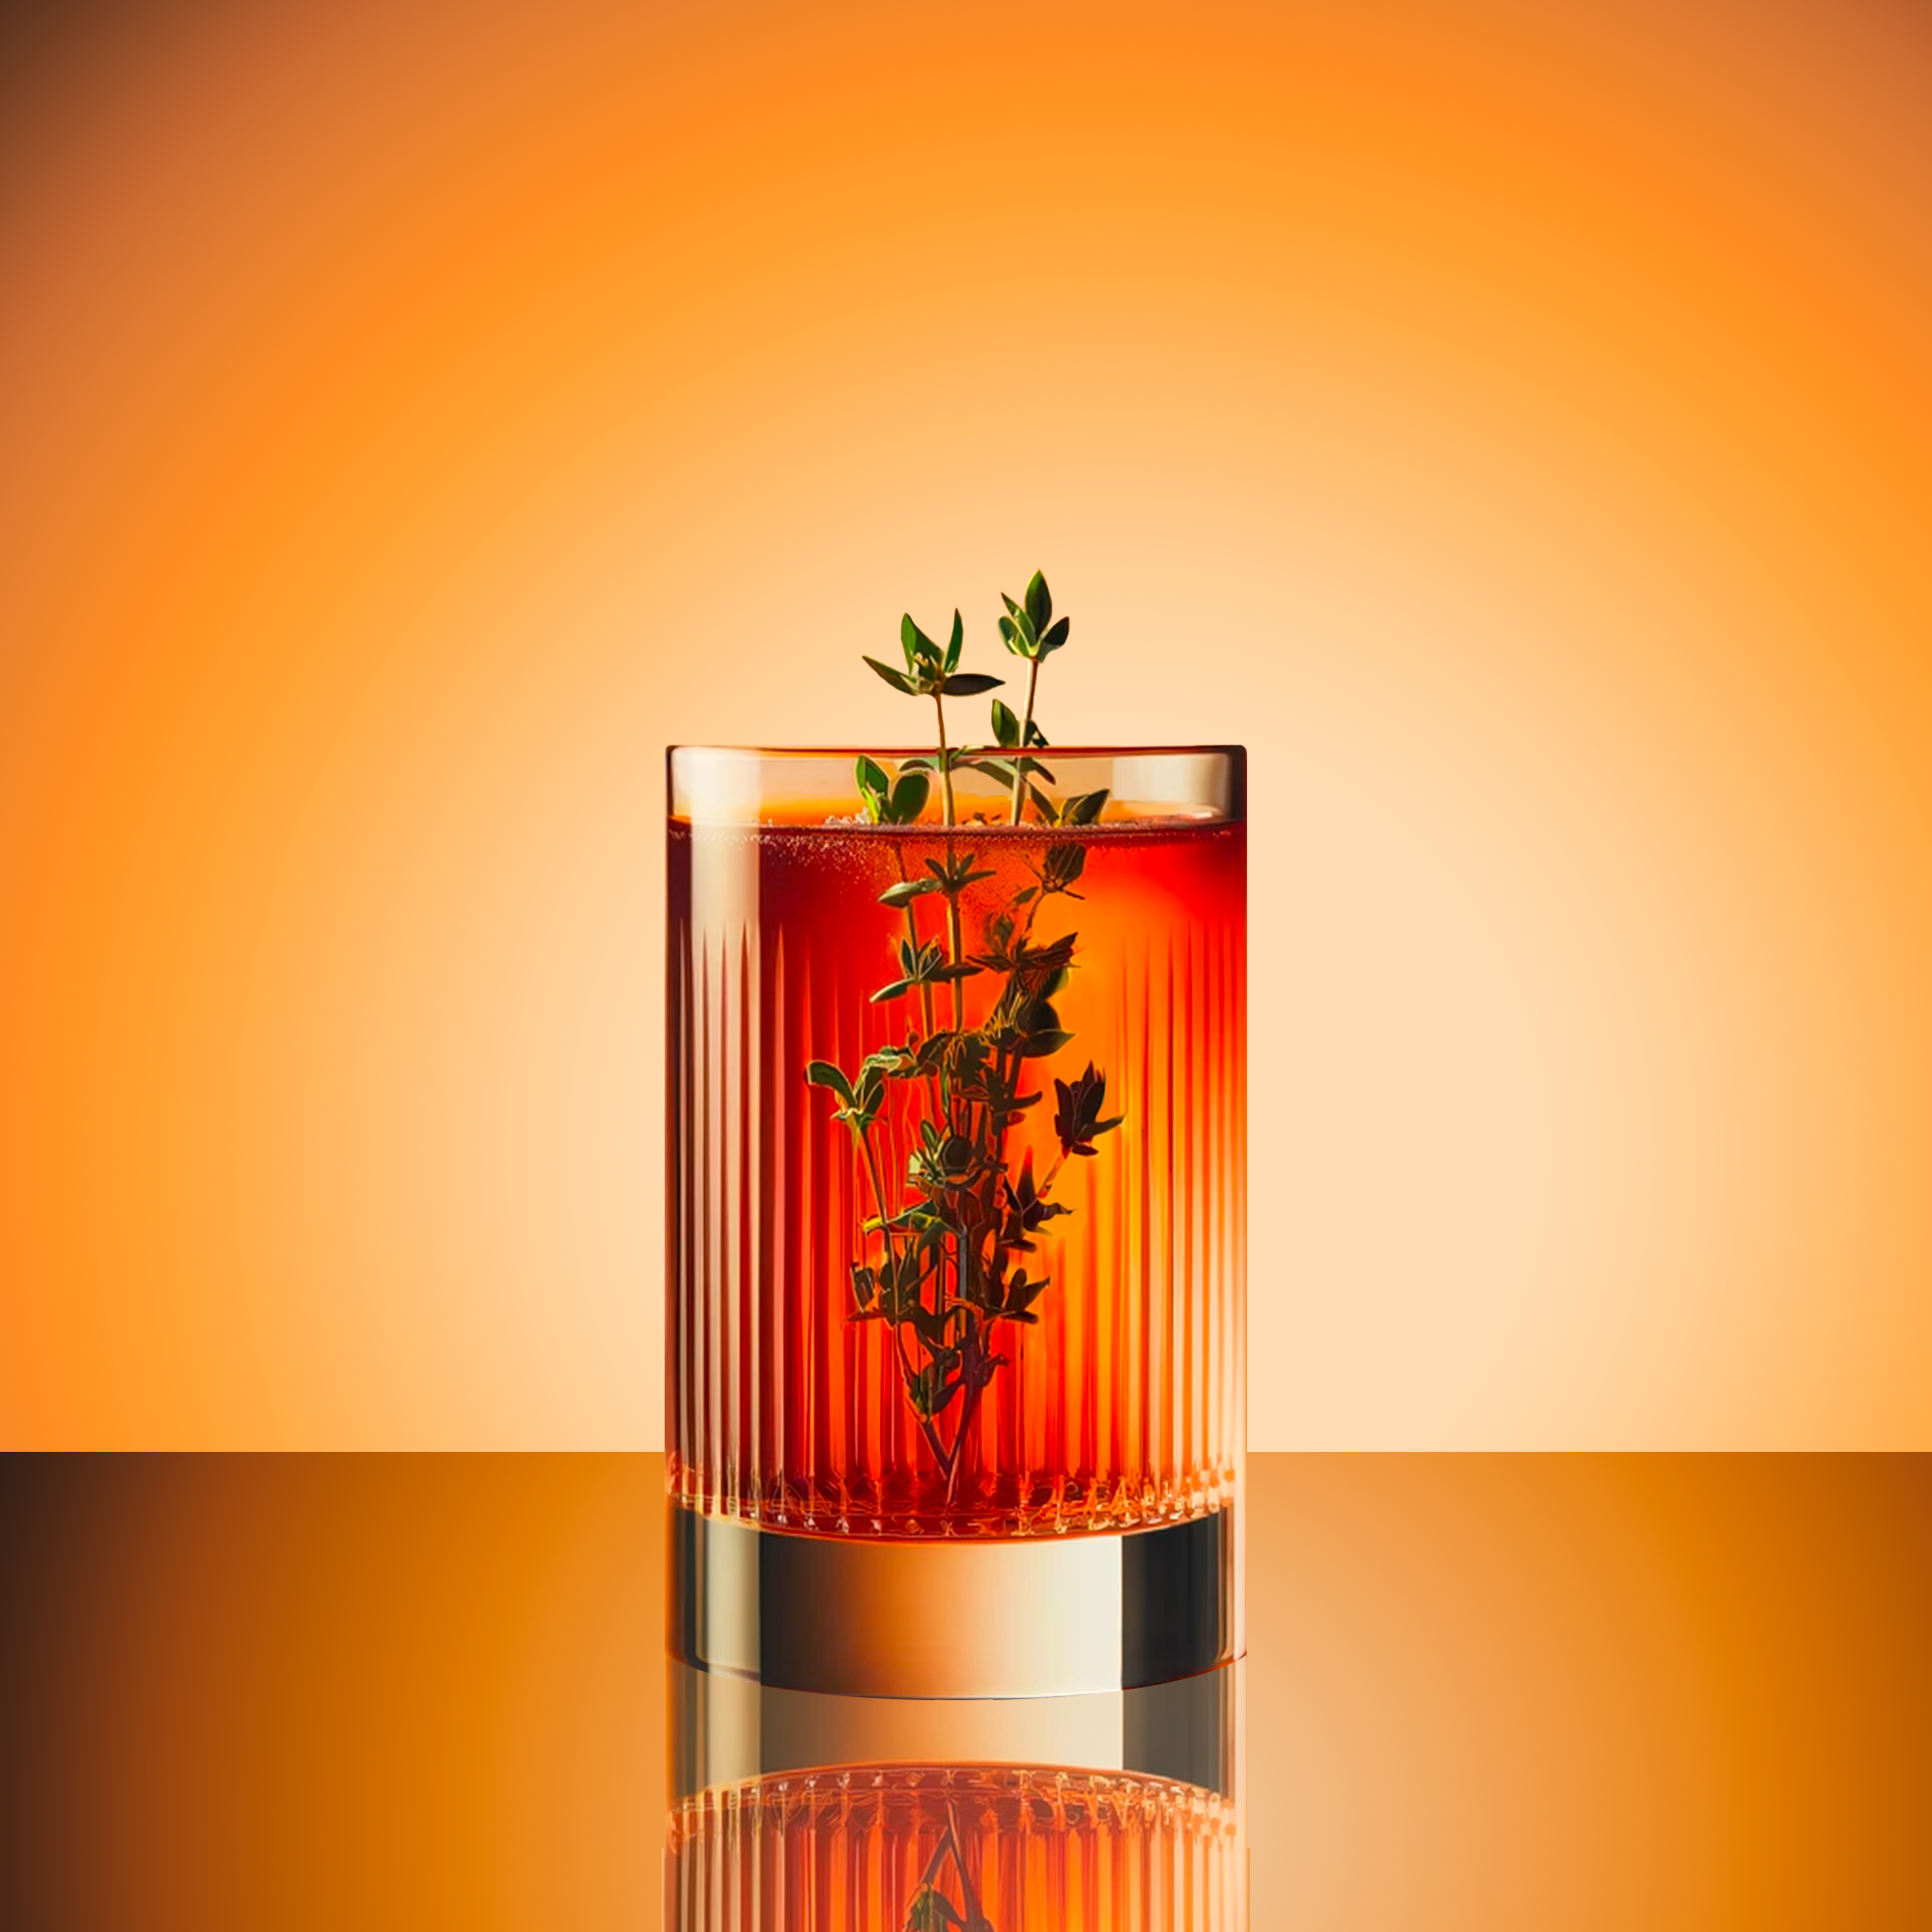 Cocktail Garibaldi with Campari. Blood orange or red beverage with thyme sprig. Brown gradient background